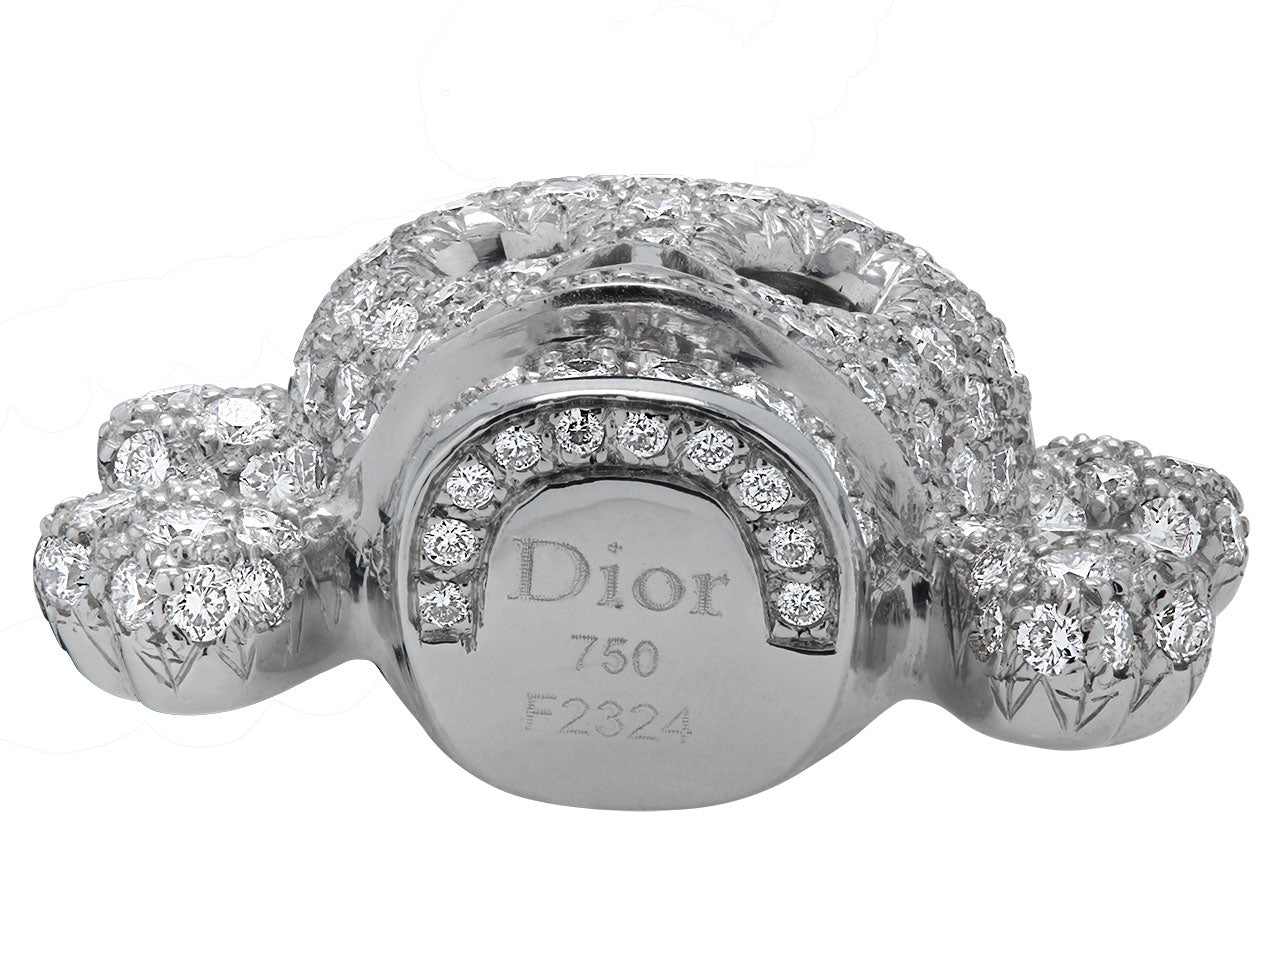 Dior 'Tête De Mort' Pave Diamond Charm Pendant Necklace in 18K White Gold